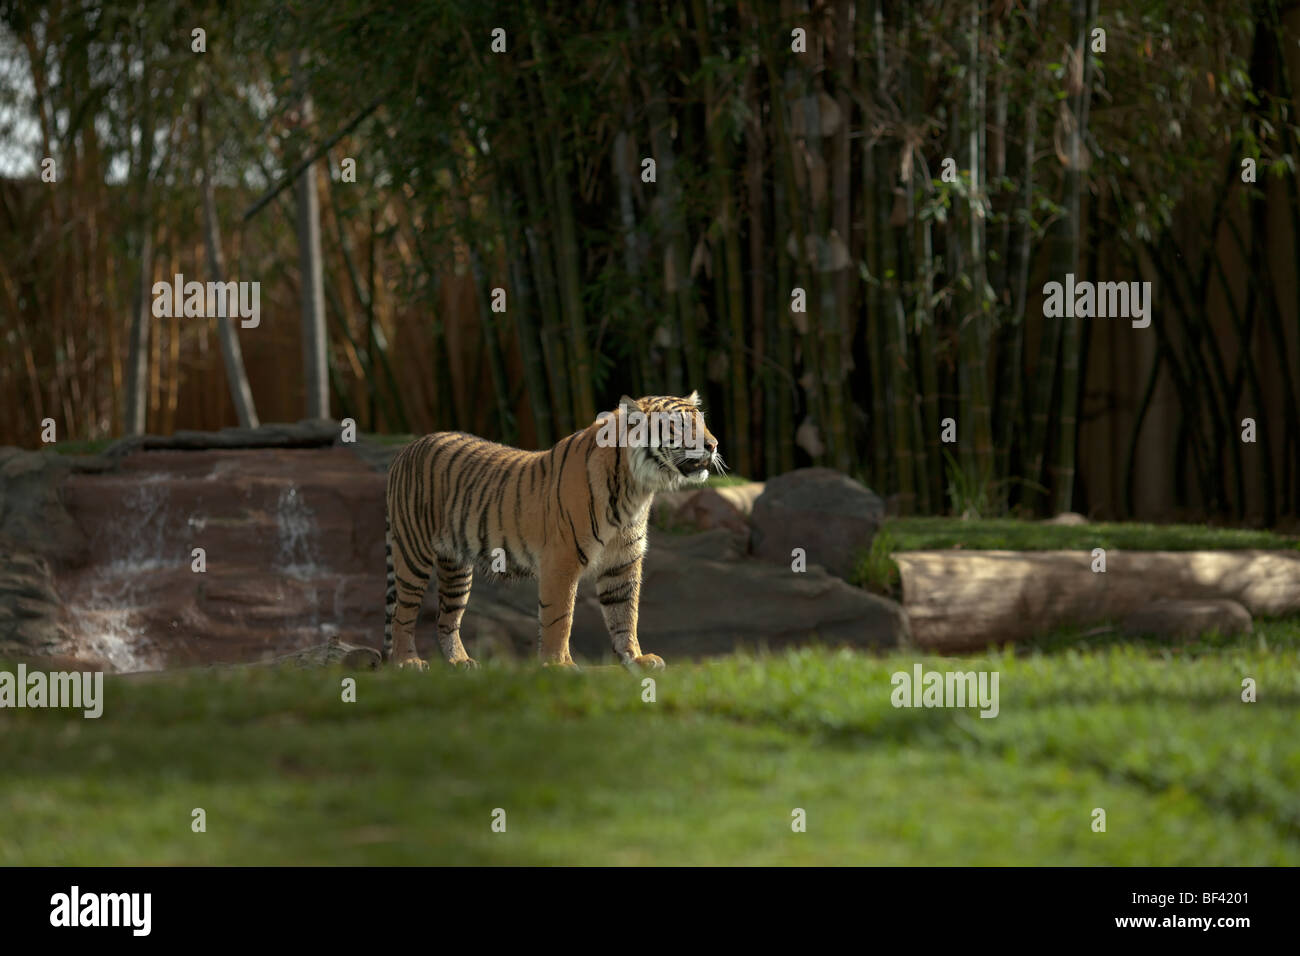 A Sumatran Tiger inside the Tiger Temple enclosure at Australia zoo. Stock Photo